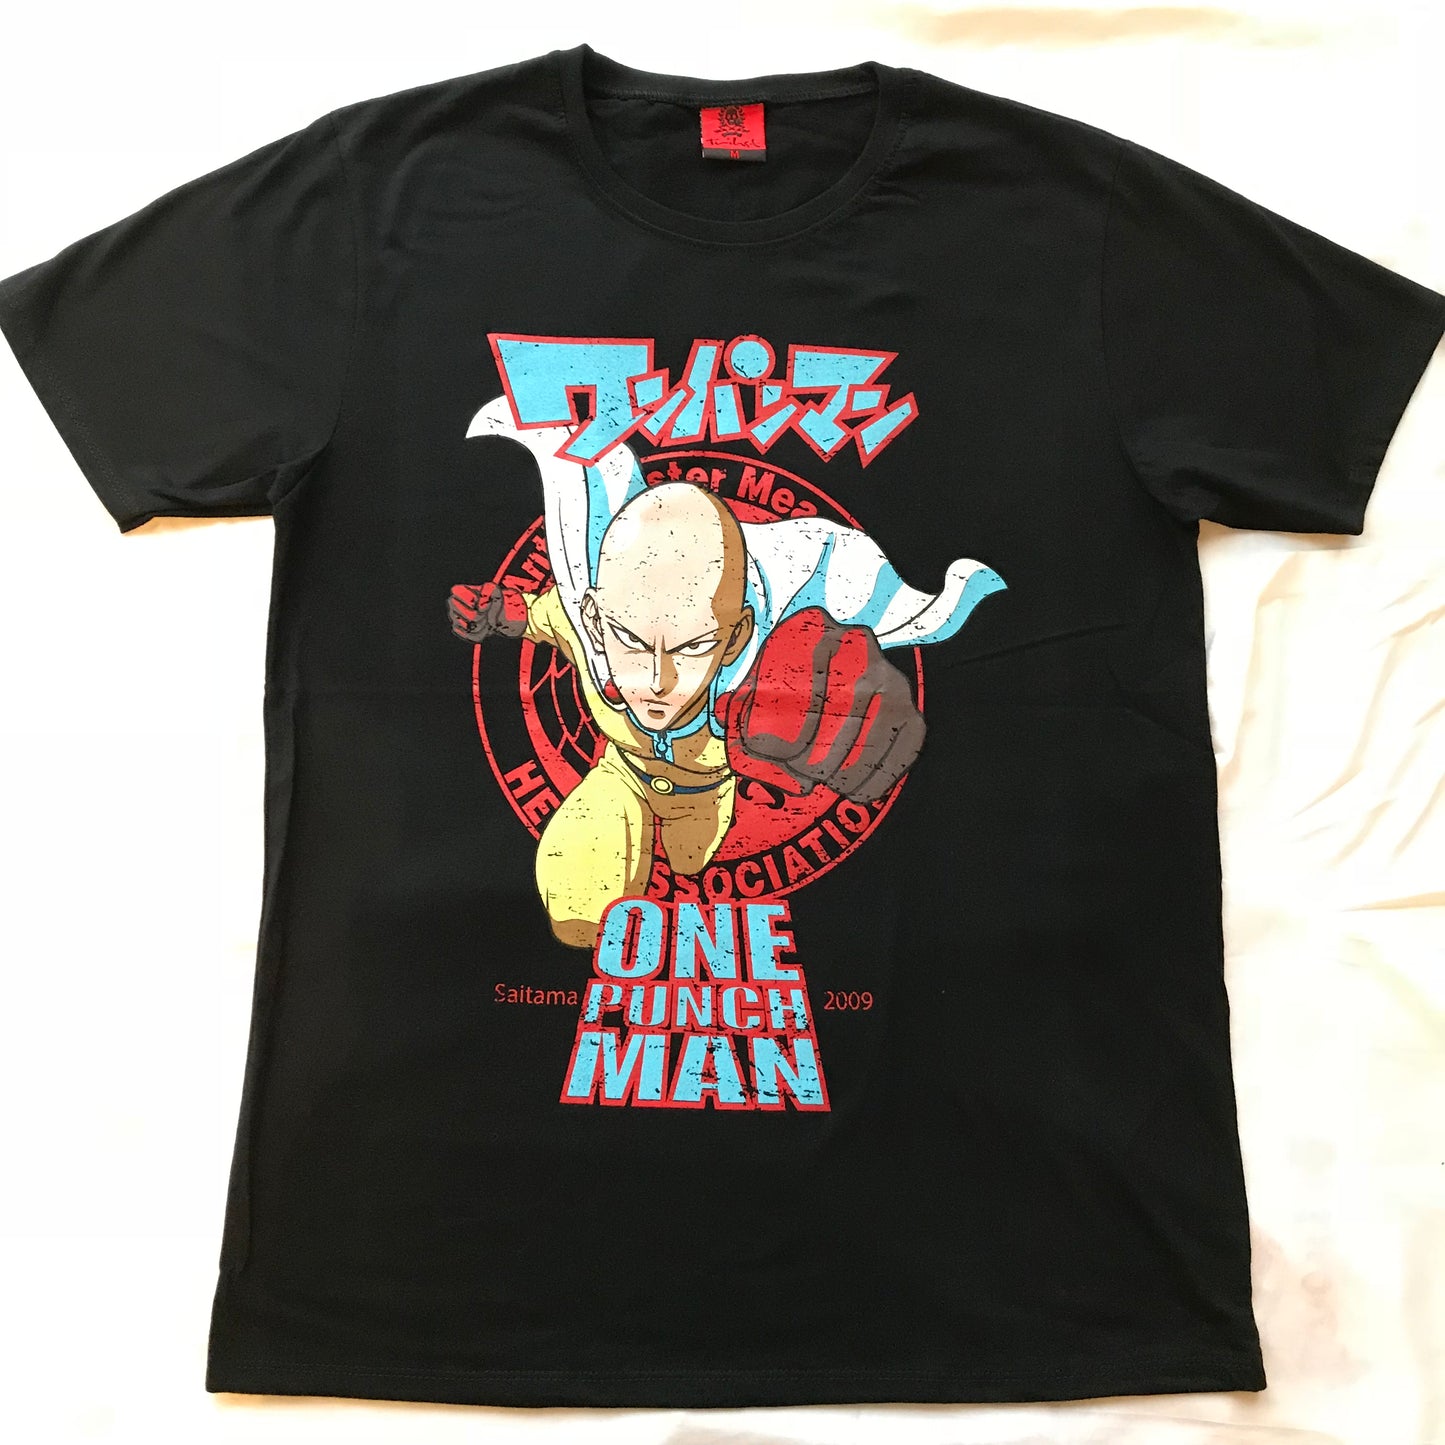 One Punch Man / Saitama